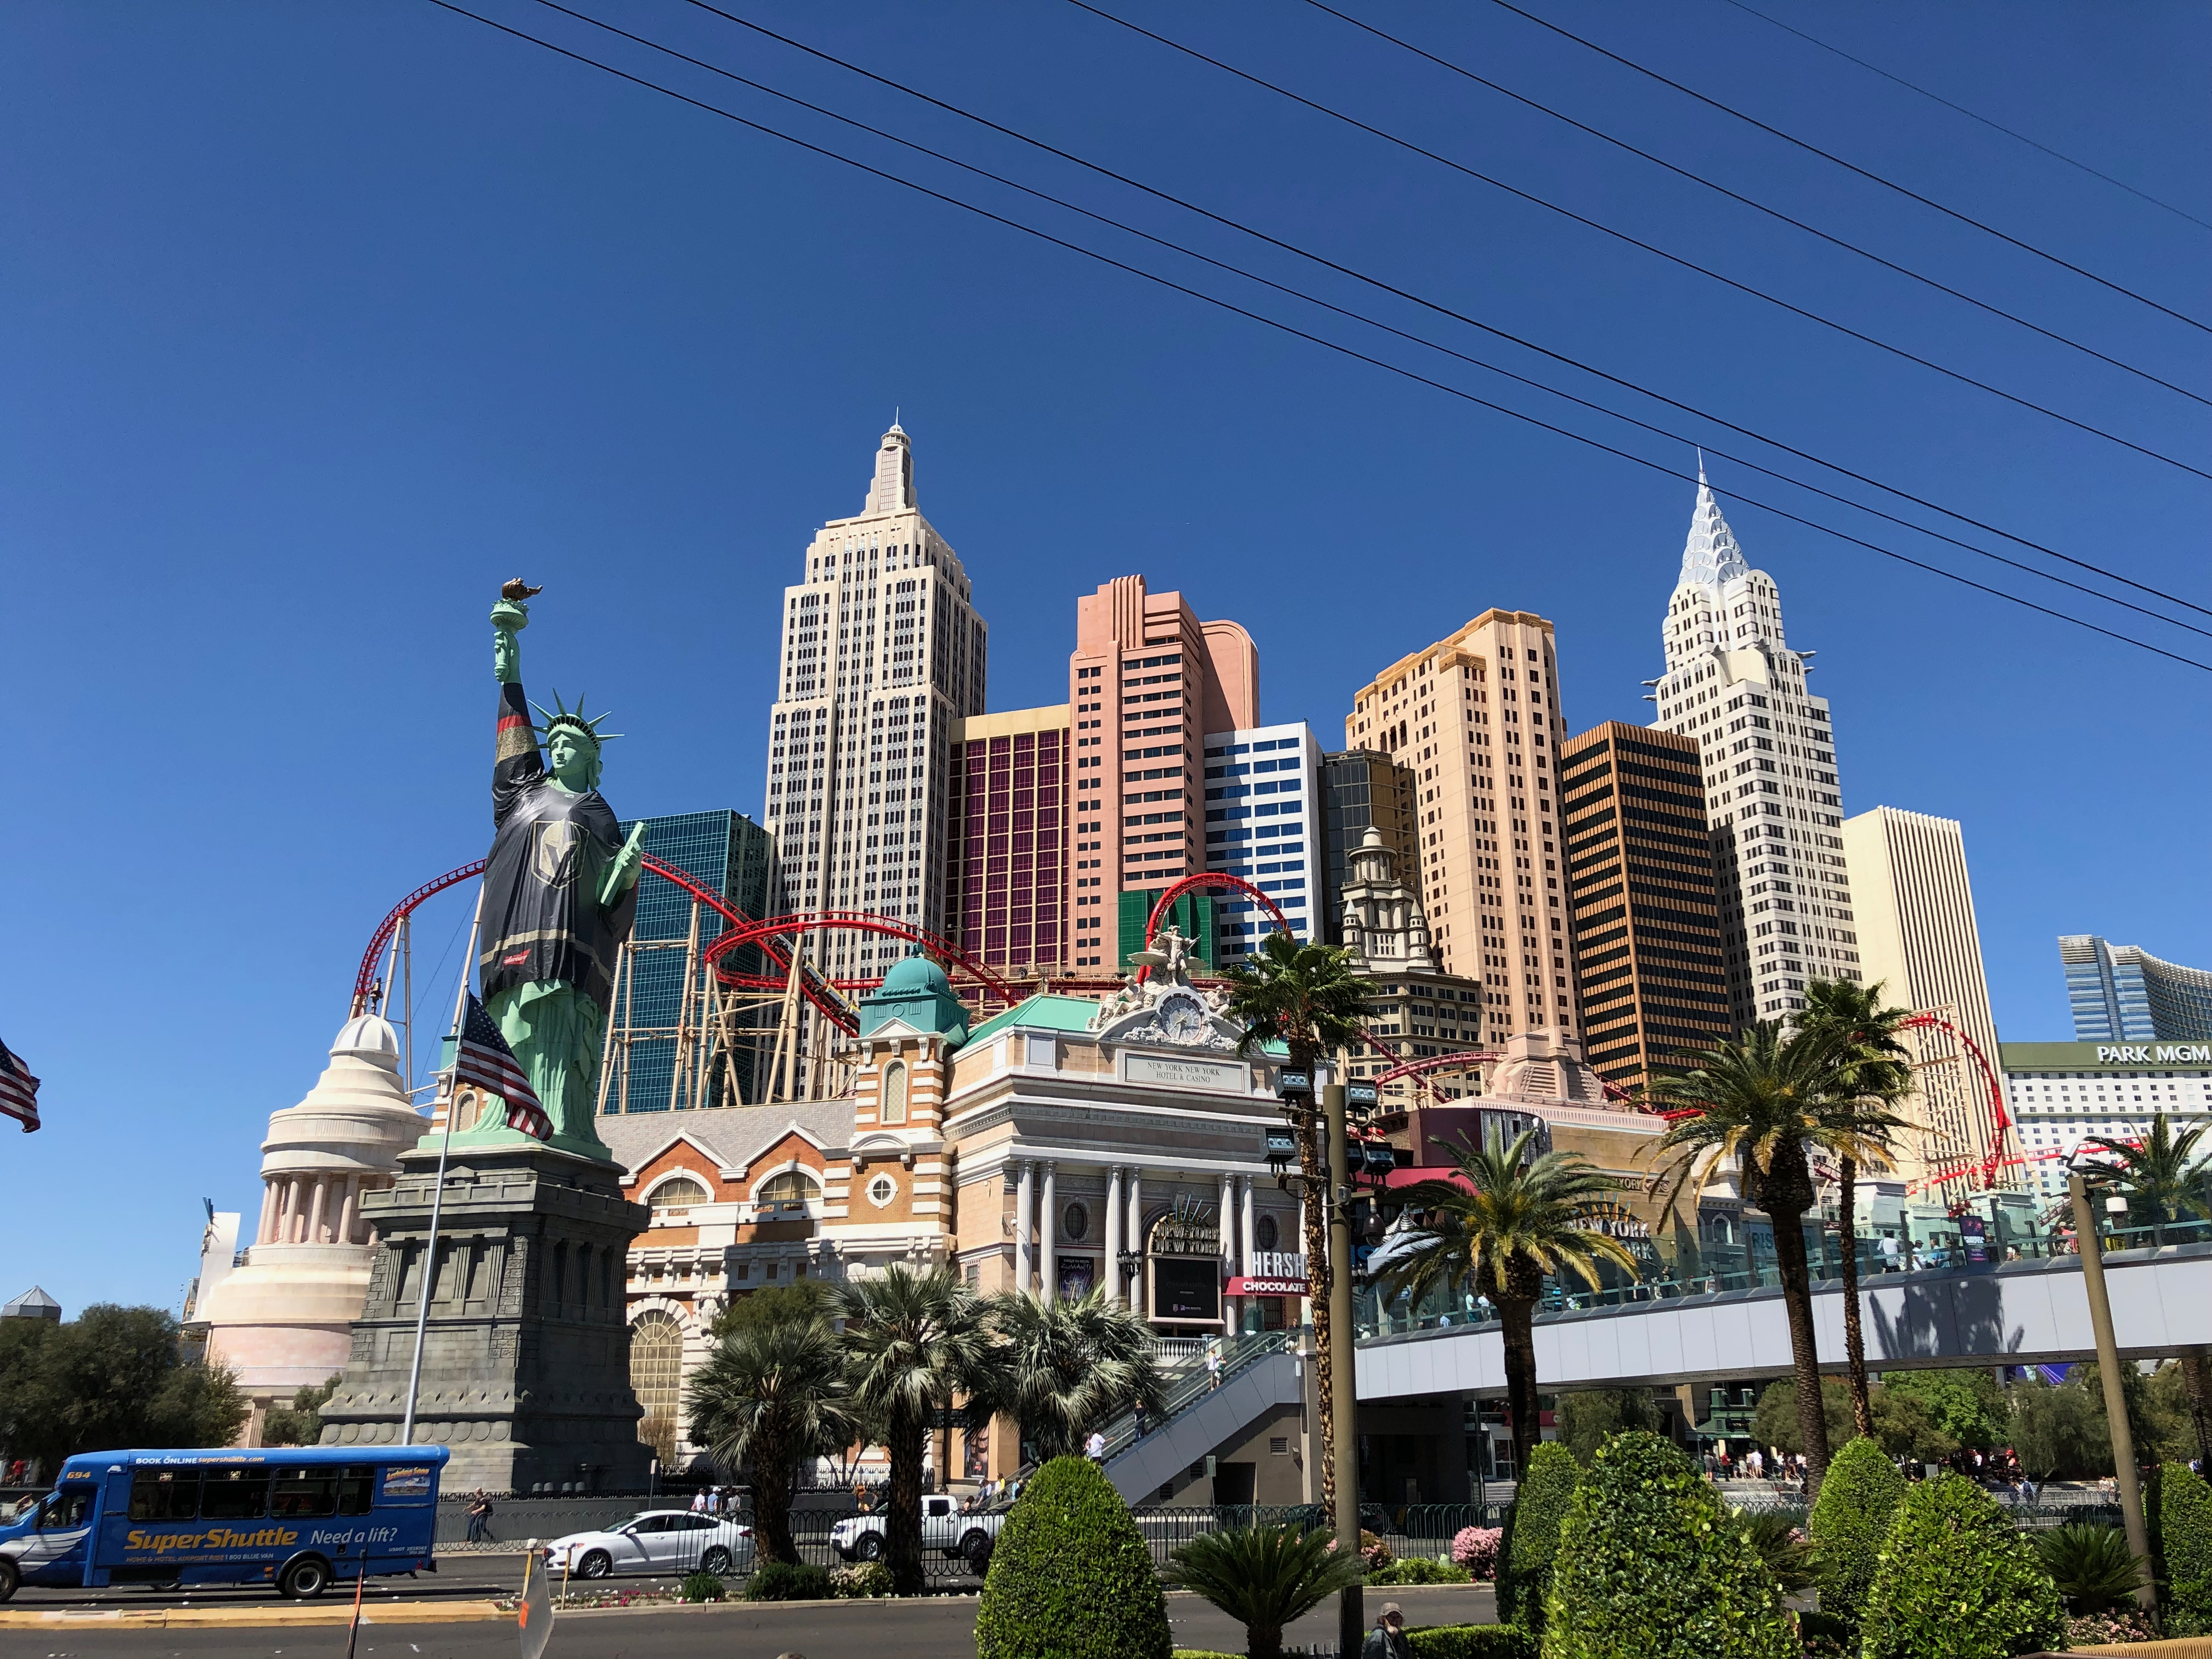 Blick auf das New York Hotel in Las Vegas